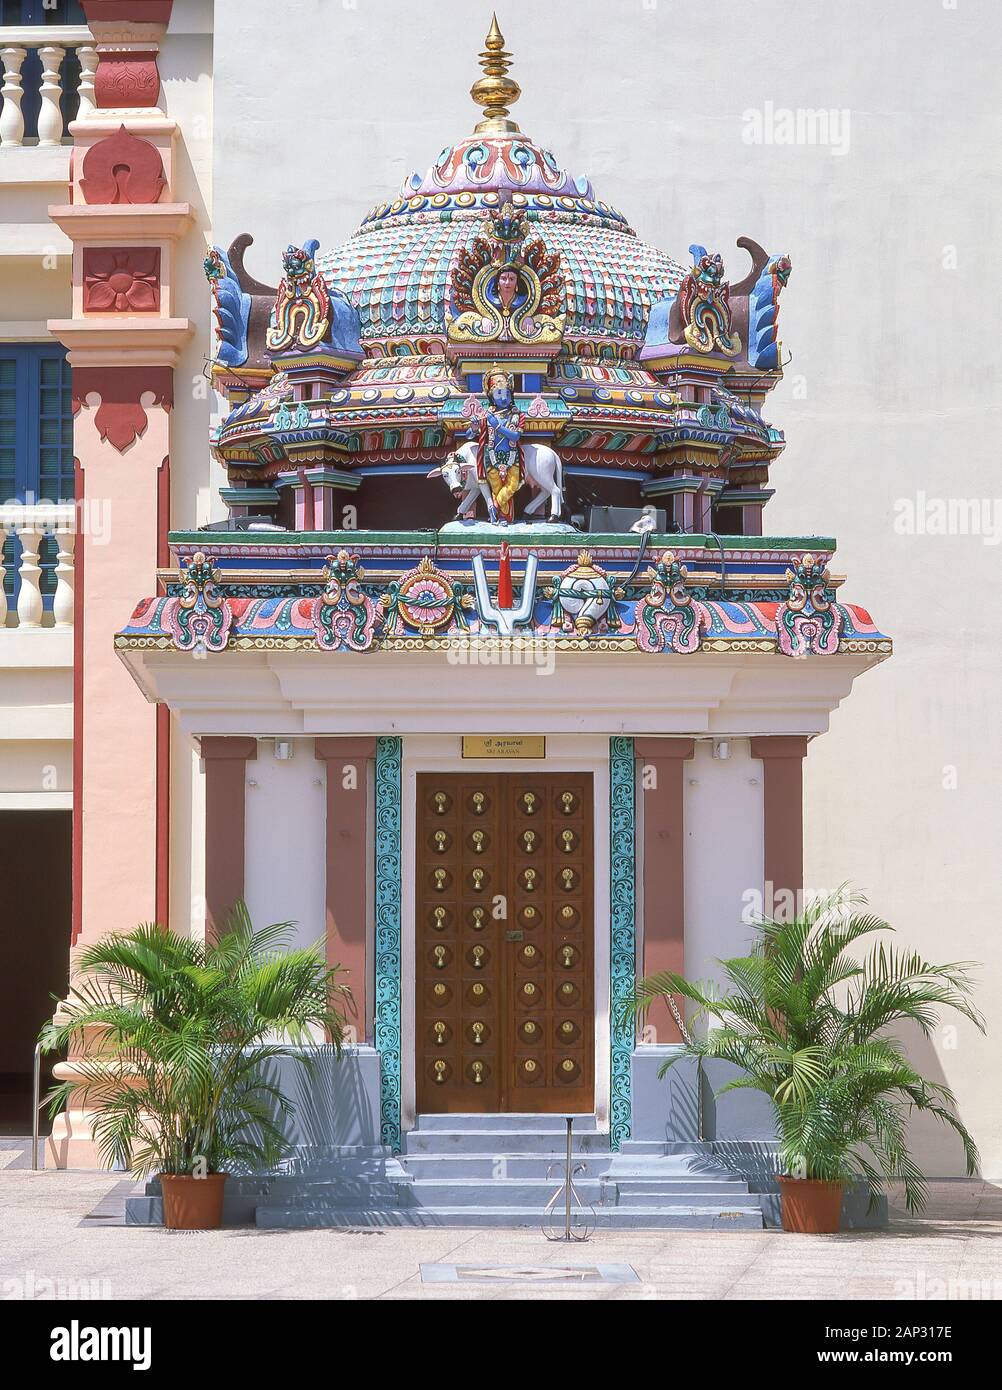 Sri Aravan, Sri Mariamman hinduistischer Tempel, South Bridge Road, Chinatown, Outram District, Central Area, Singapur Insel (Pulau Ujong), Singapur Stockfoto